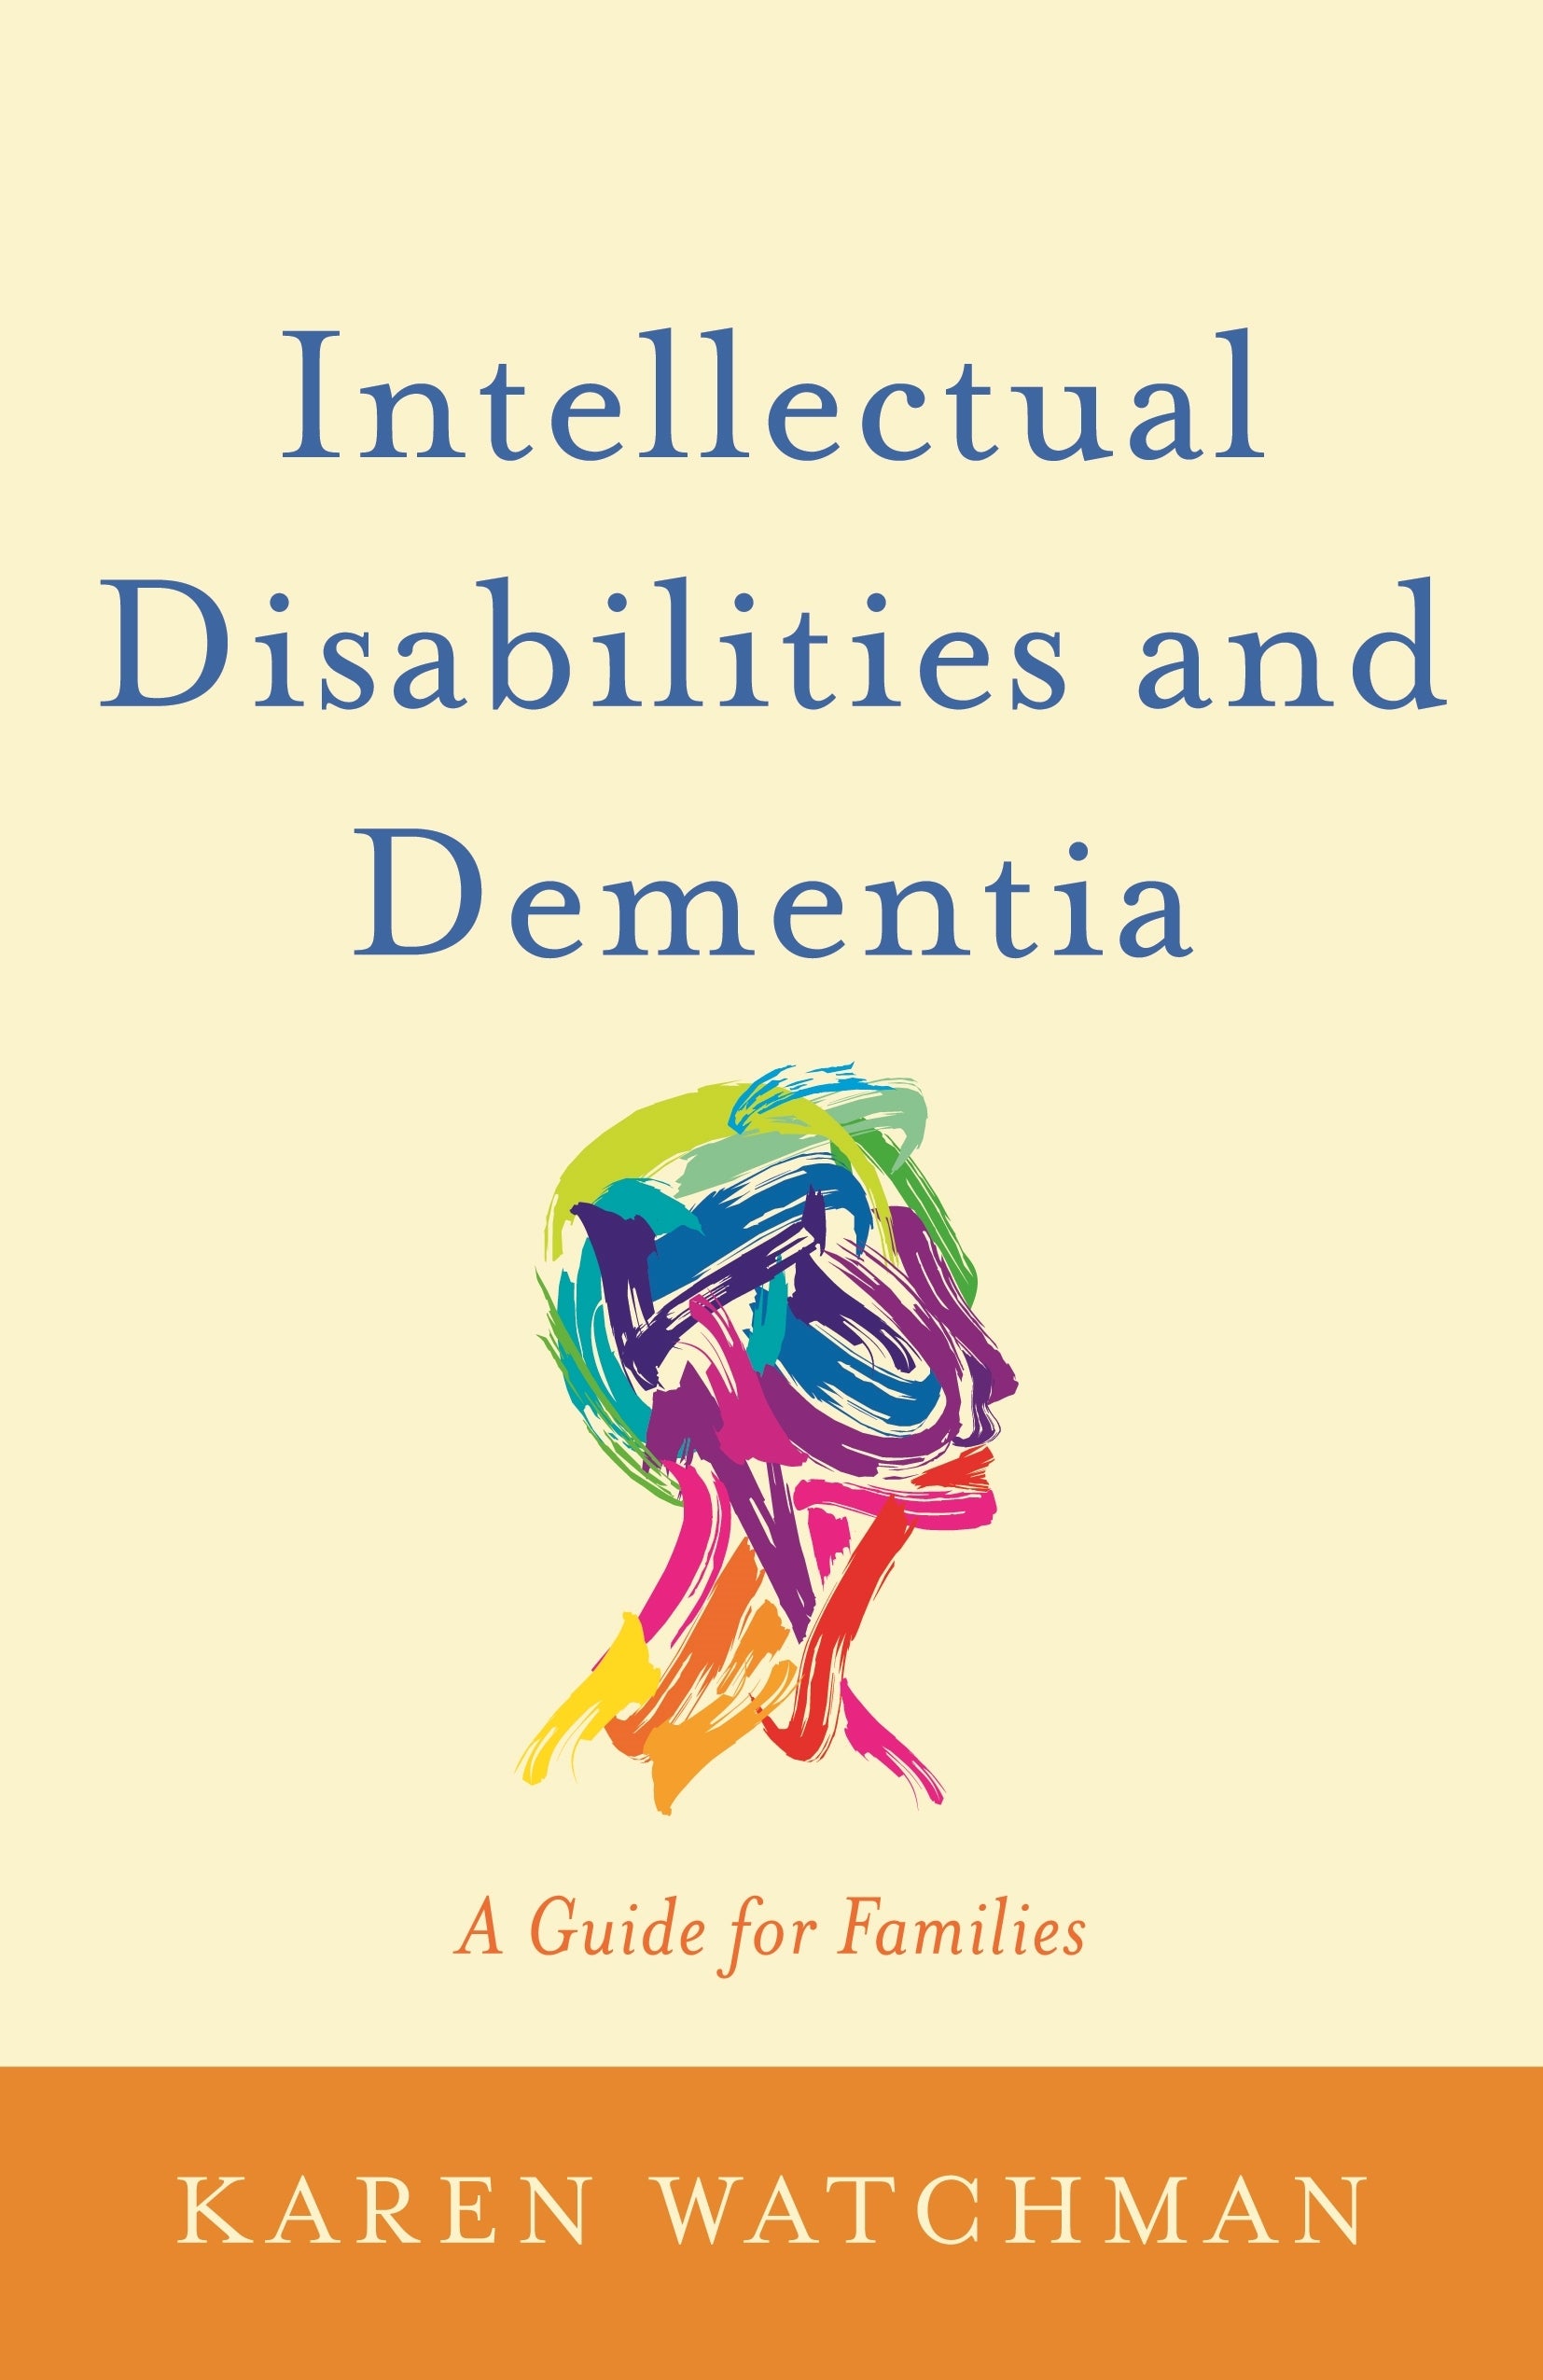 Intellectual Disabilities and Dementia by Karen Watchman